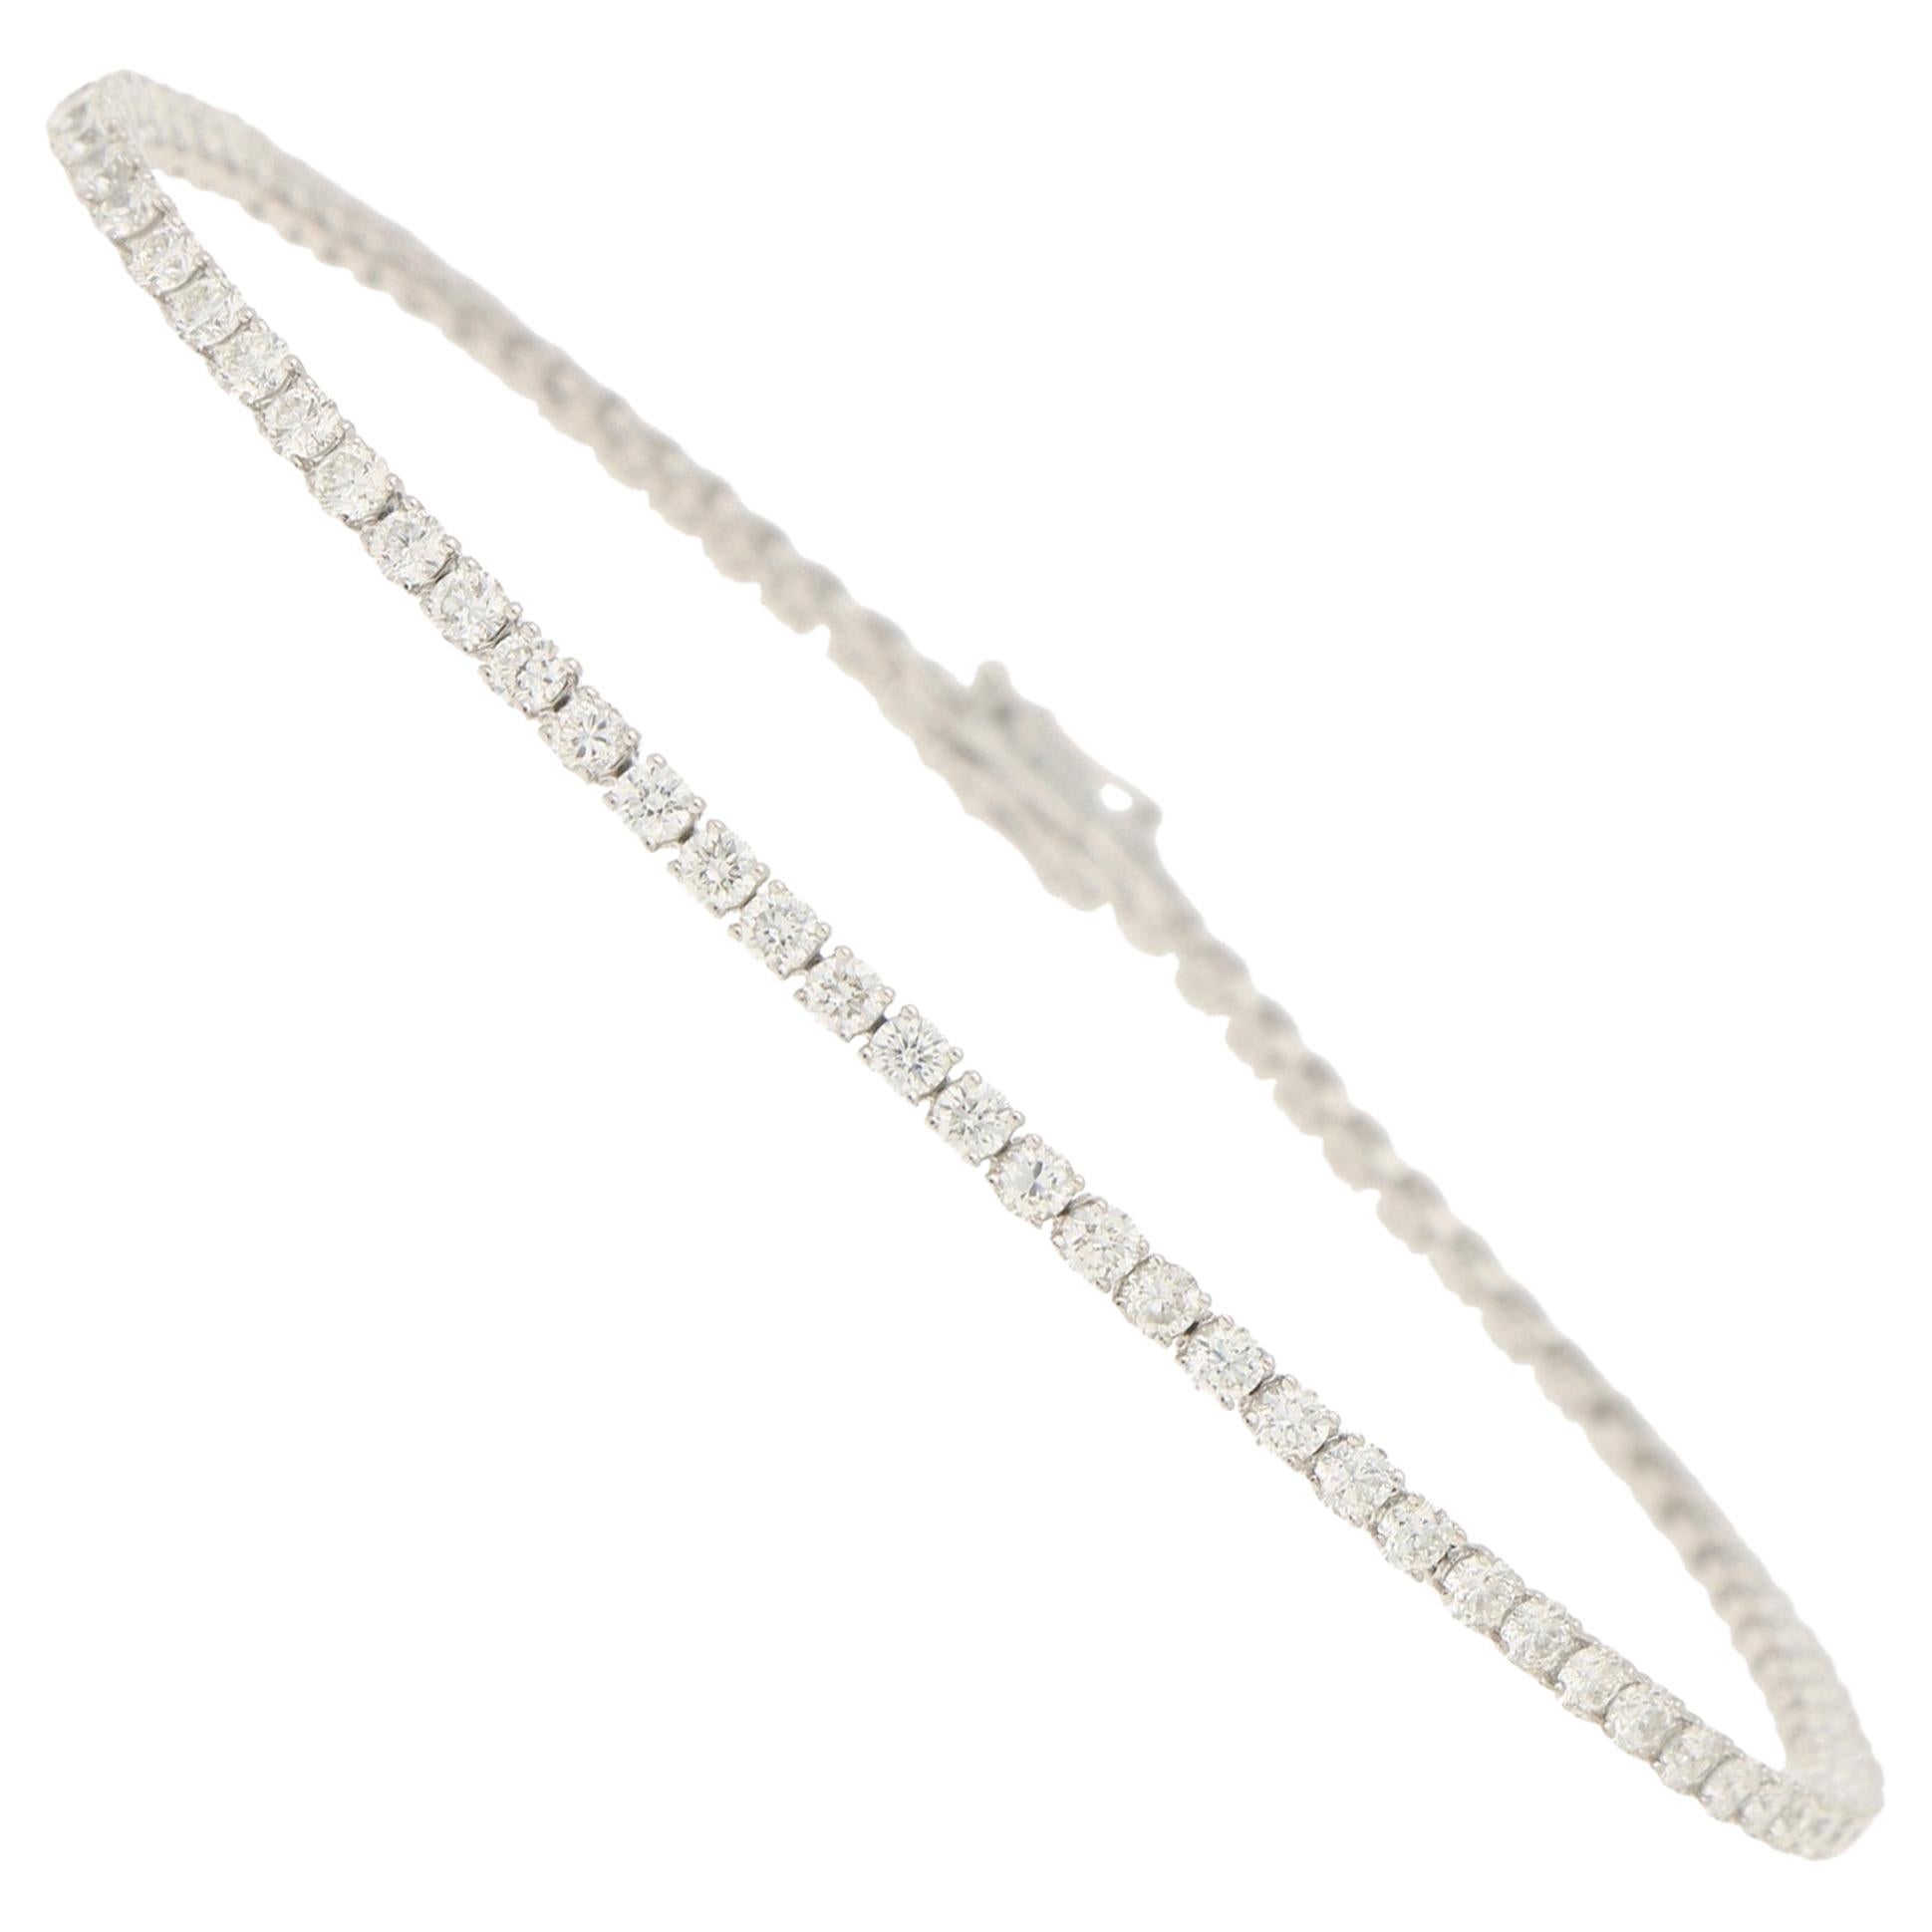 2.39 Carat White Diamond Line Tennis Bracelet Set in 18 Karat White Gold